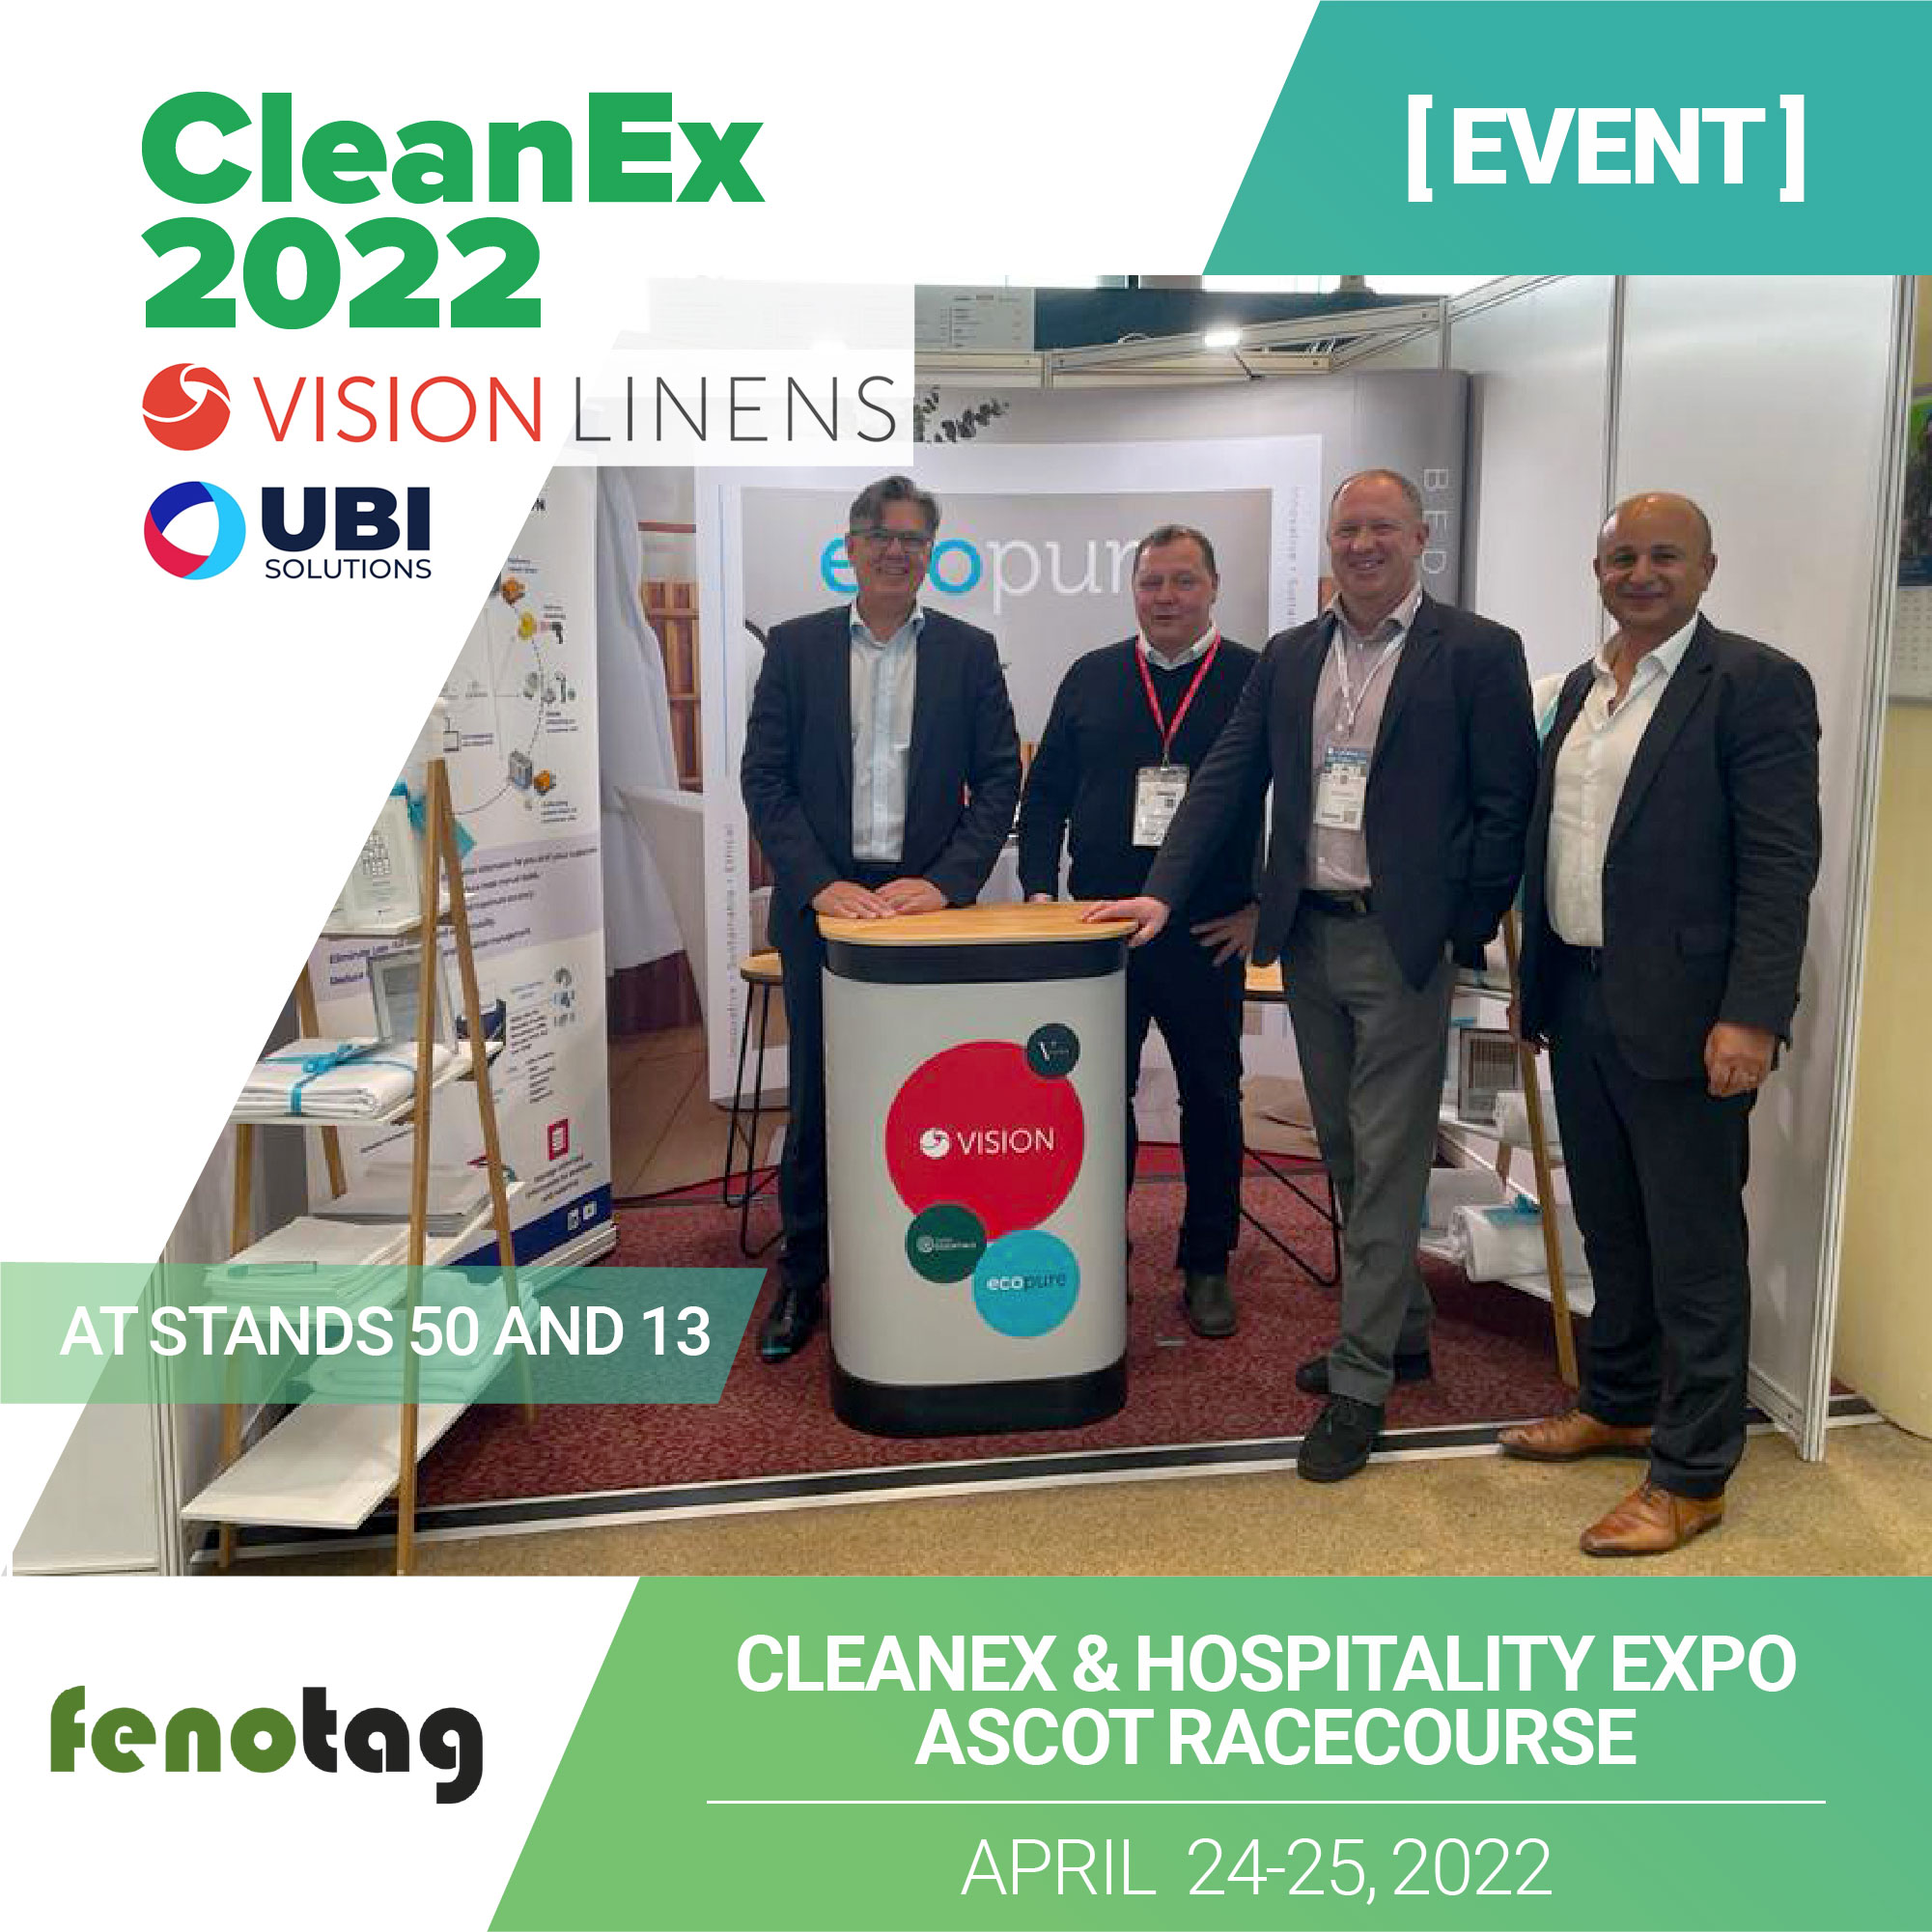 CleanEx & Hospitality Expo 2022 Fenotag